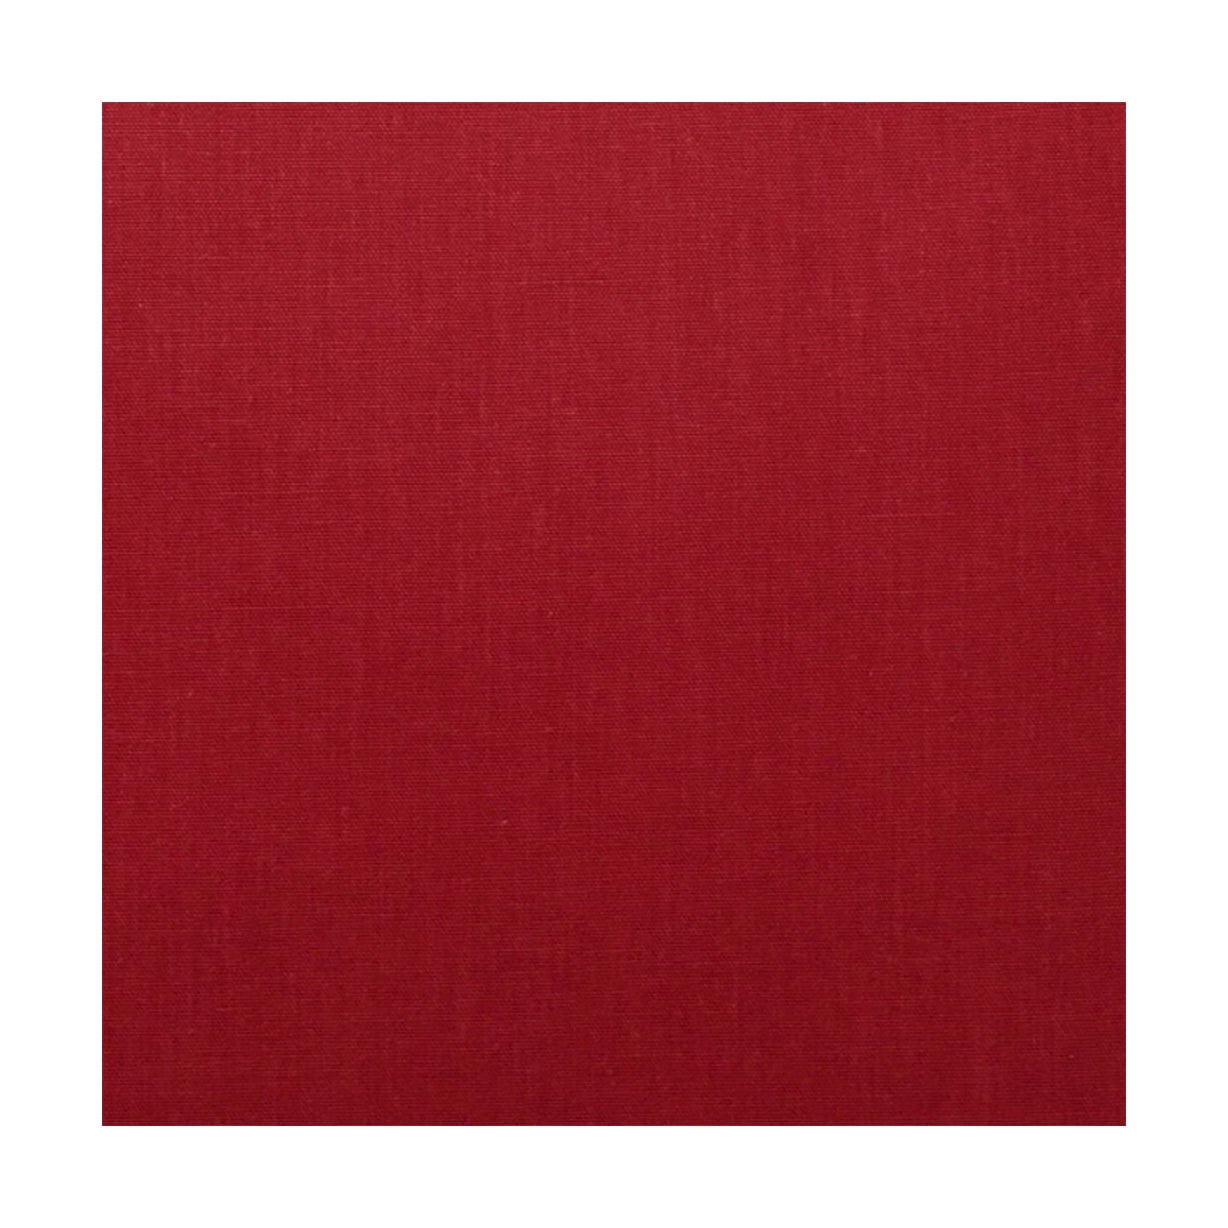 Spira Klotz Fabric Width 150 Cm (Price Per Meter), Raspberry